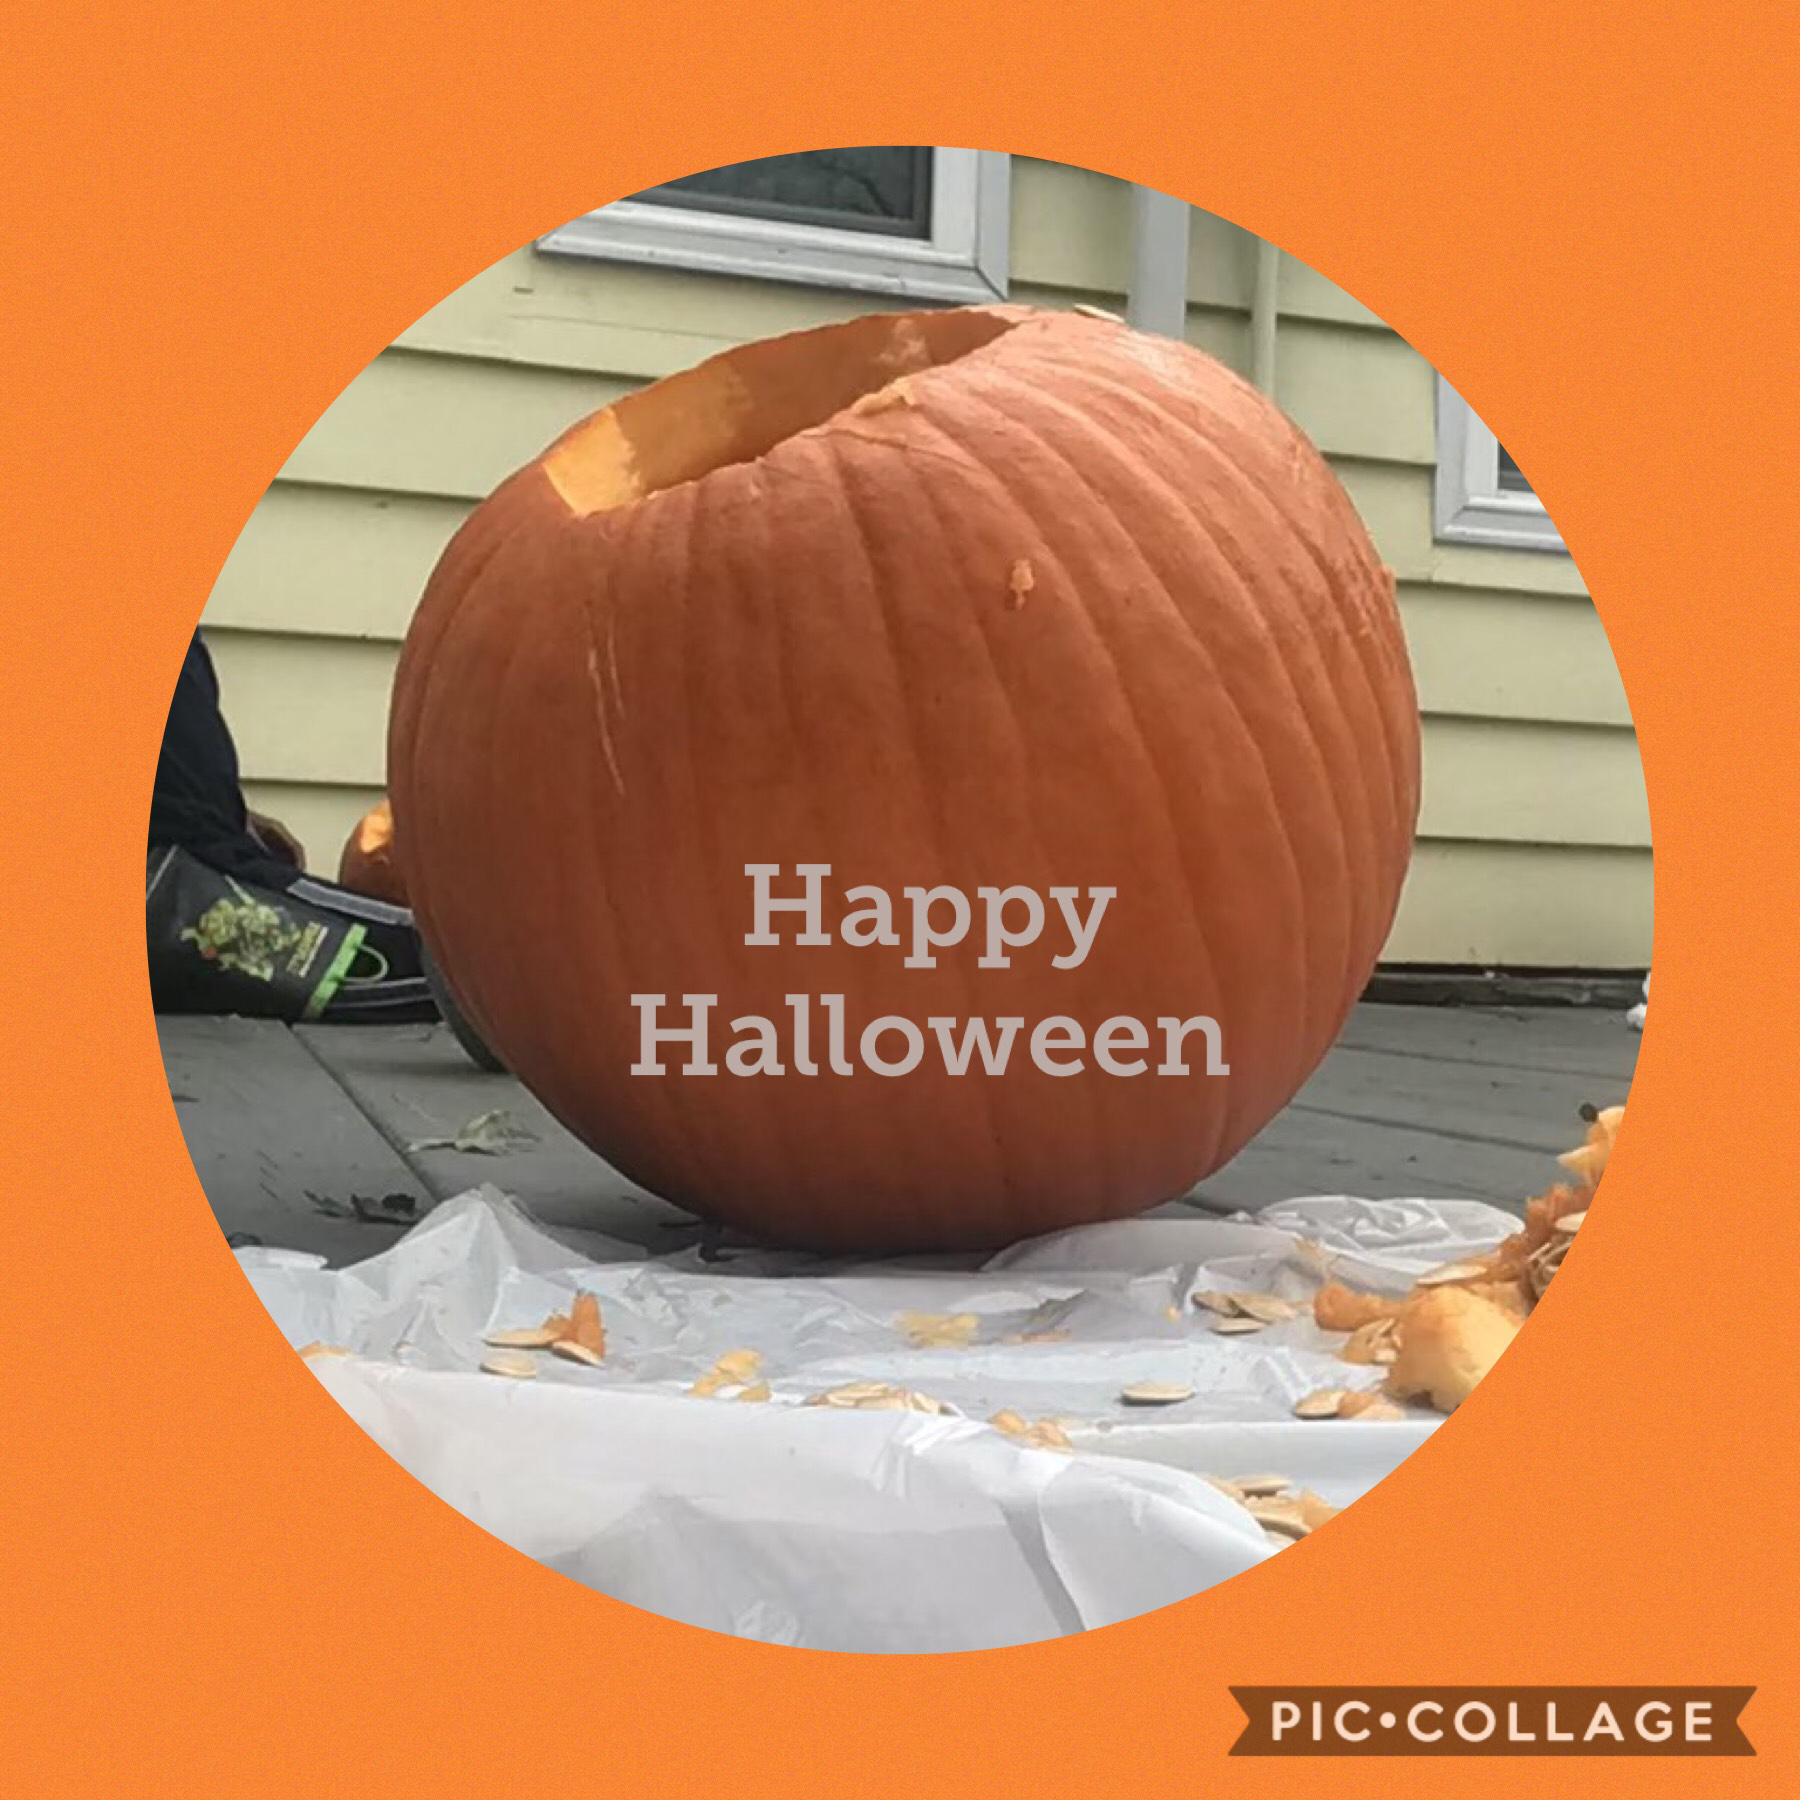 Happy Halloween, let’s carve some pumpkins!